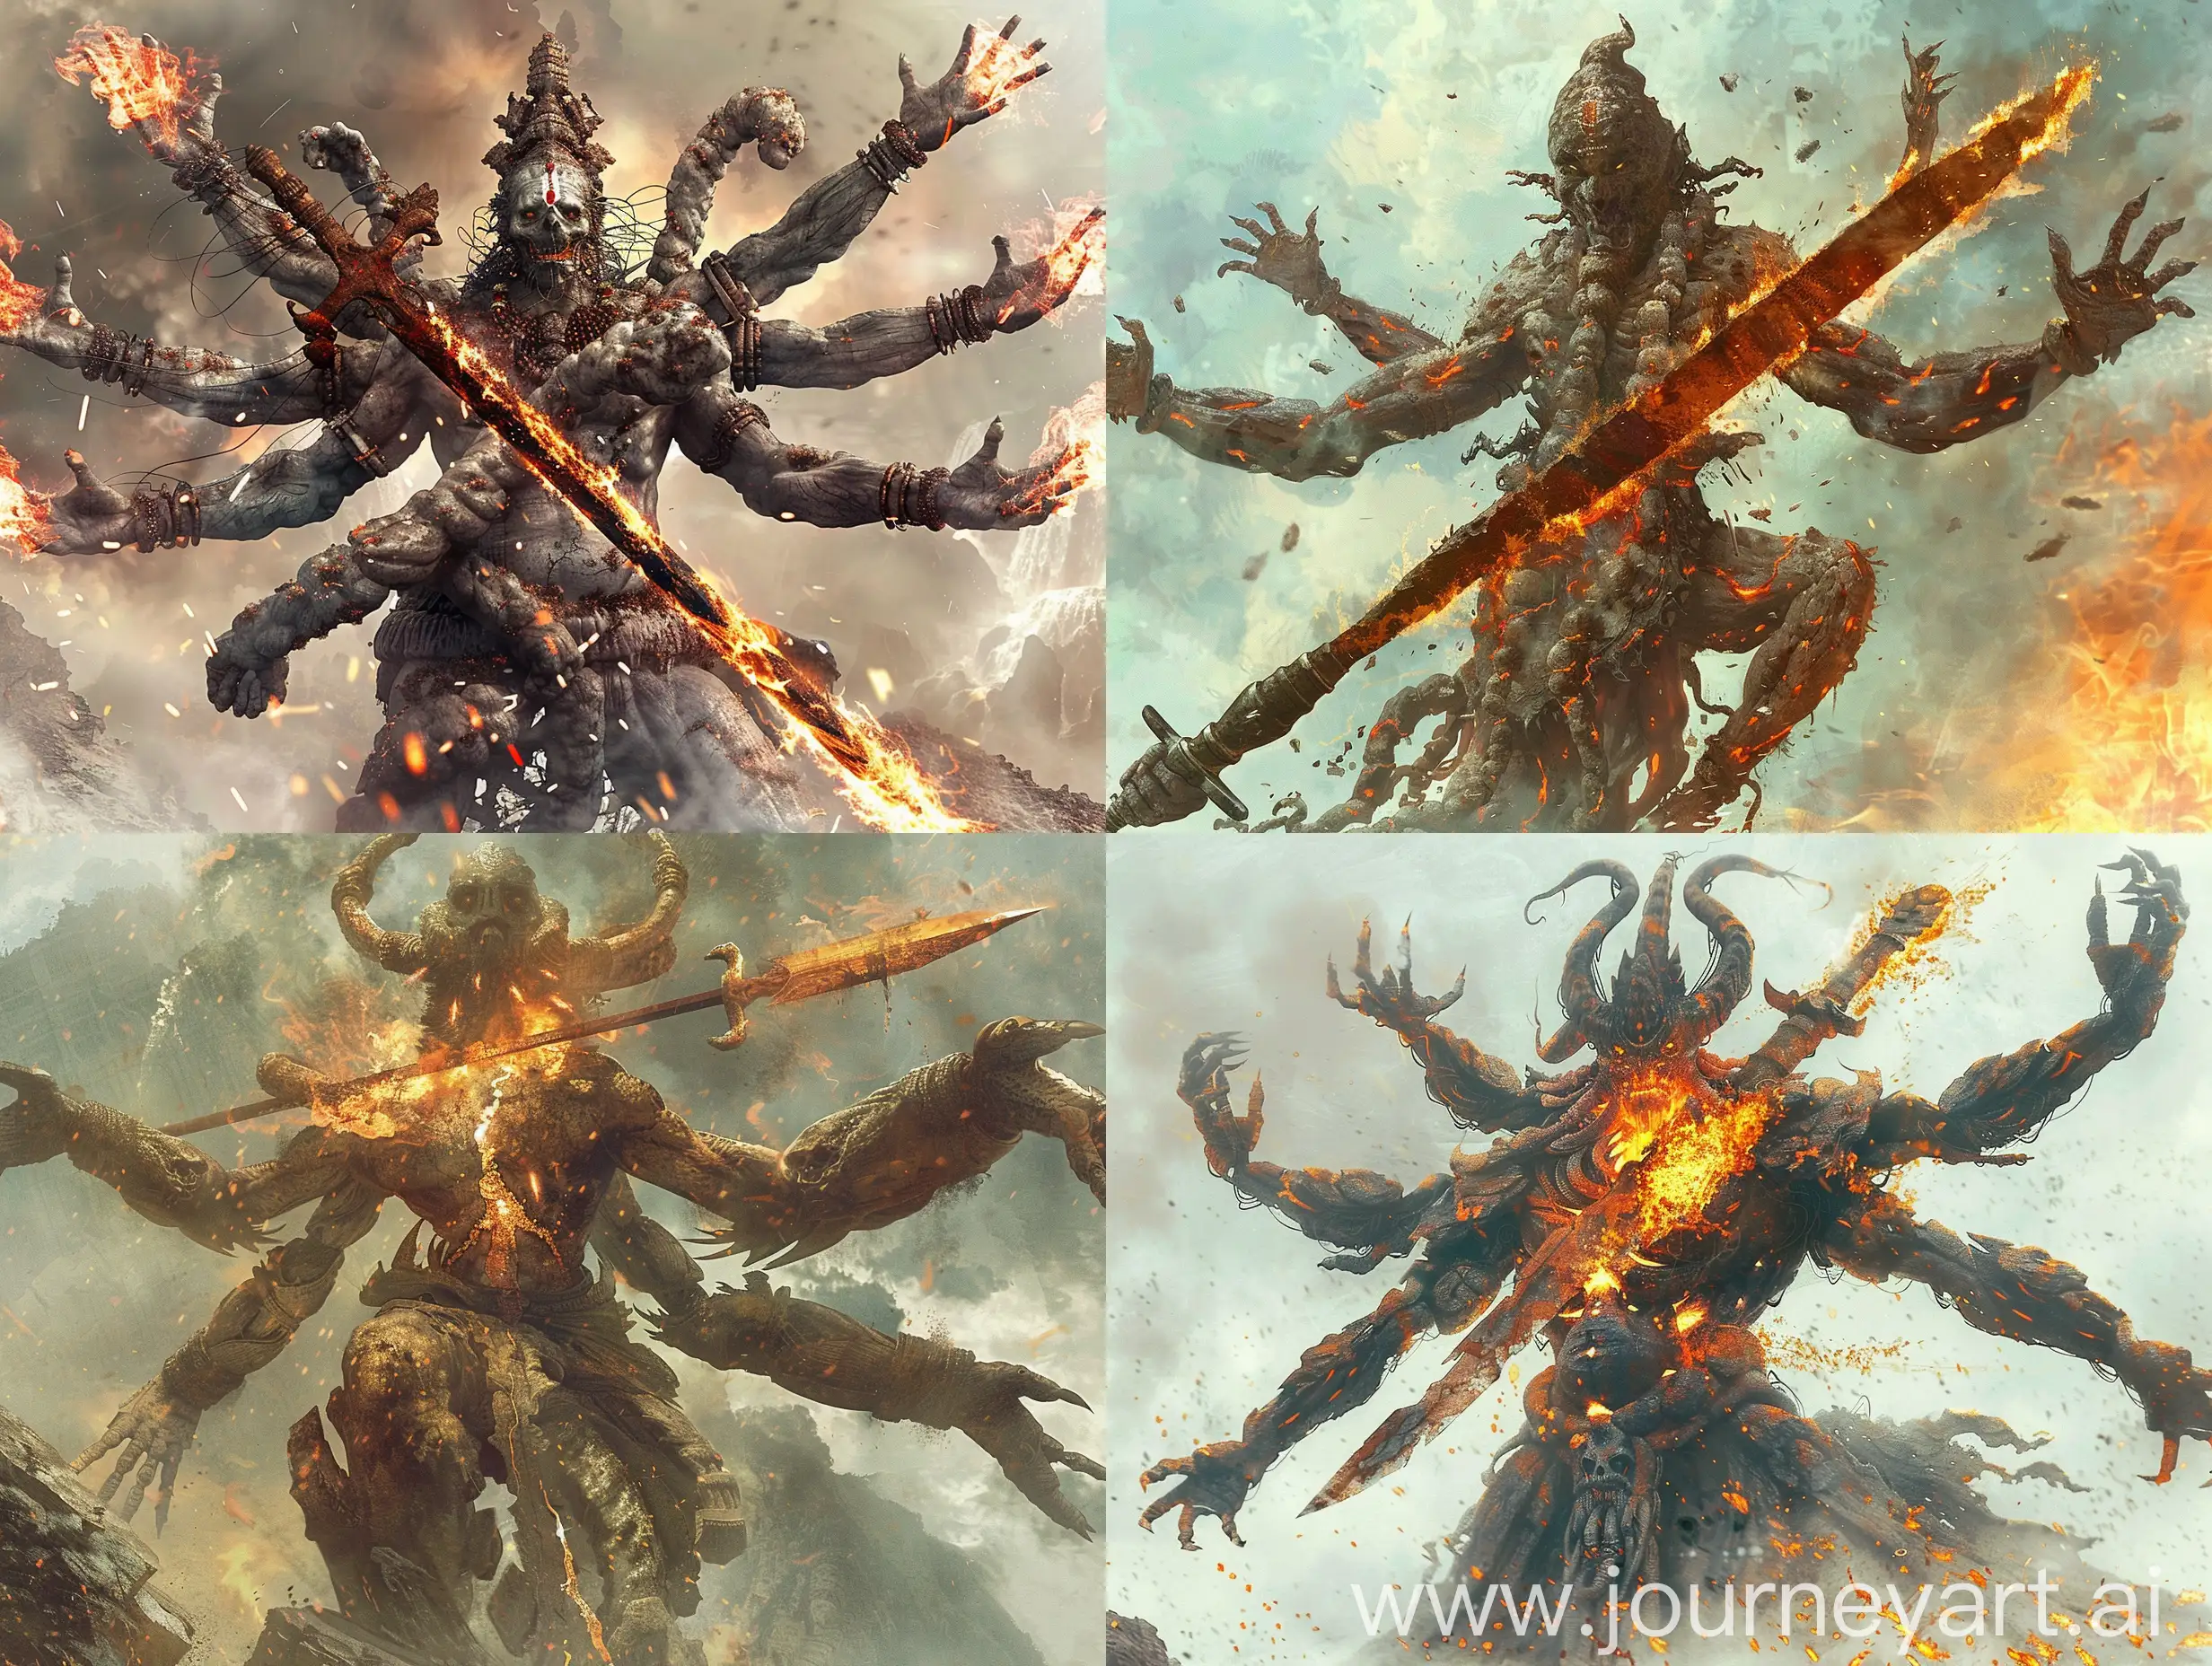 Giant-Eldritch-God-of-Extinction-Wielding-Cosmic-Fire-Sword